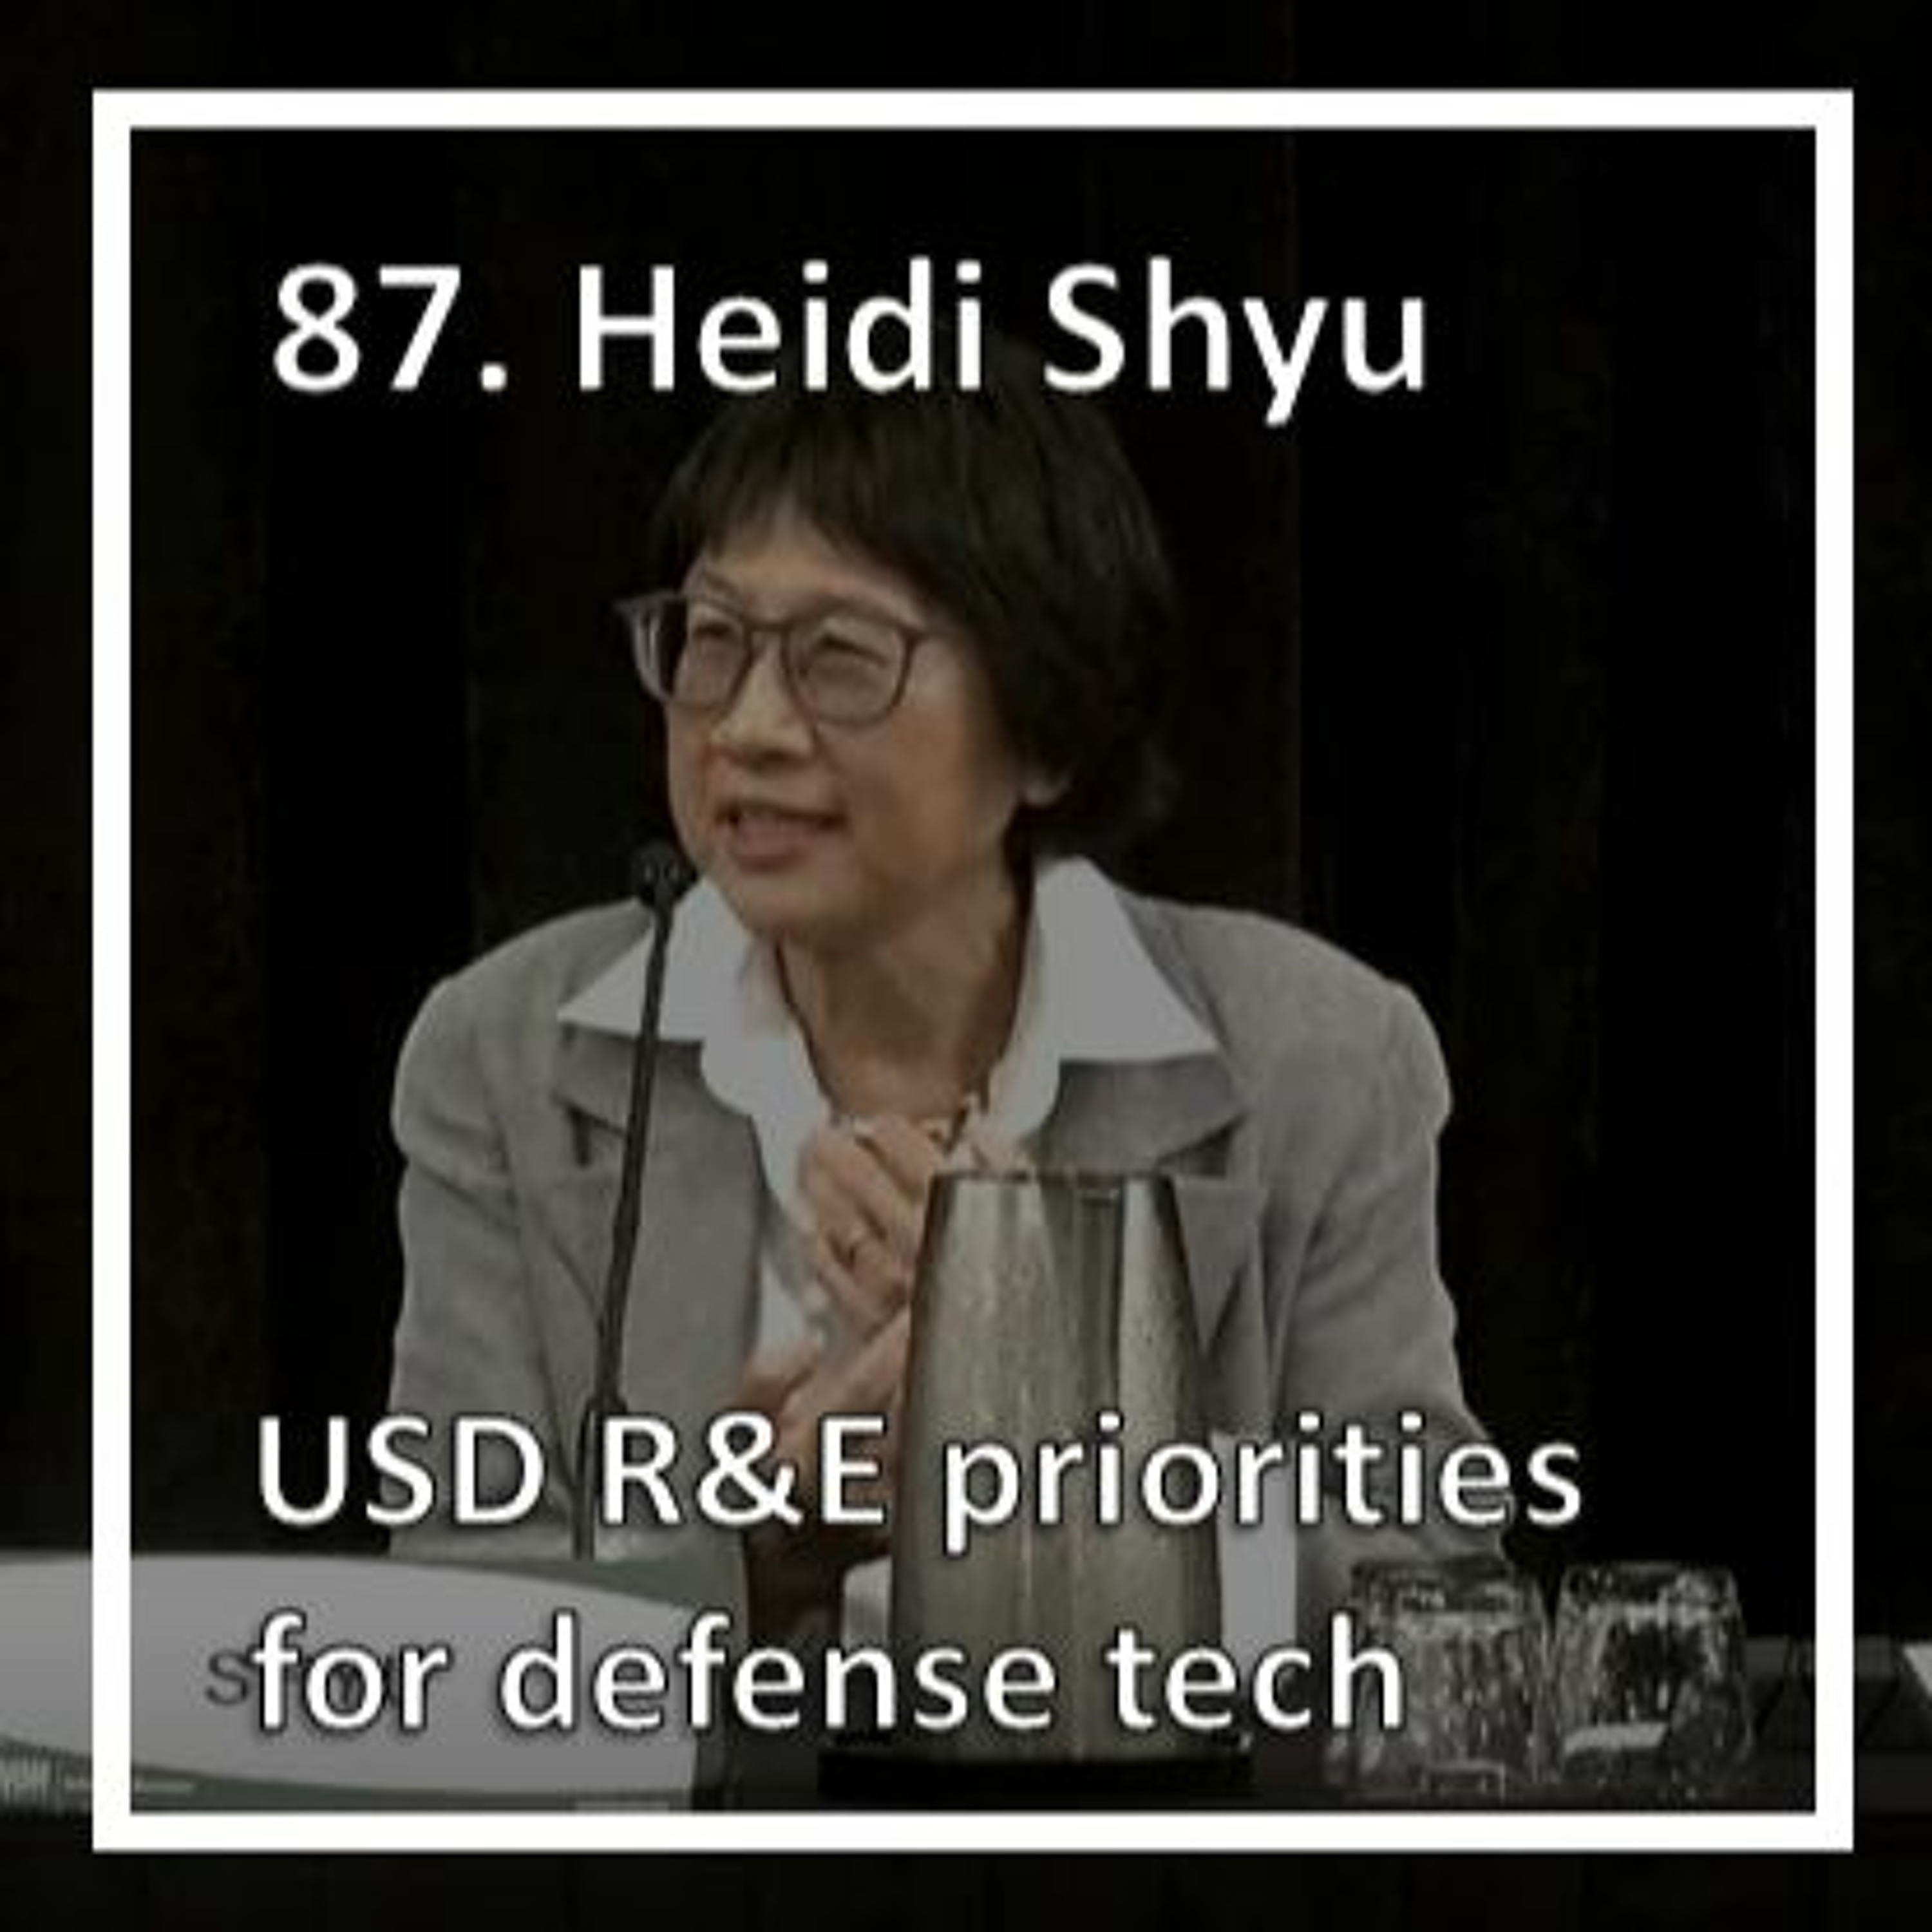 Event: USD R&E priorities for defense tech with Heidi Shyu